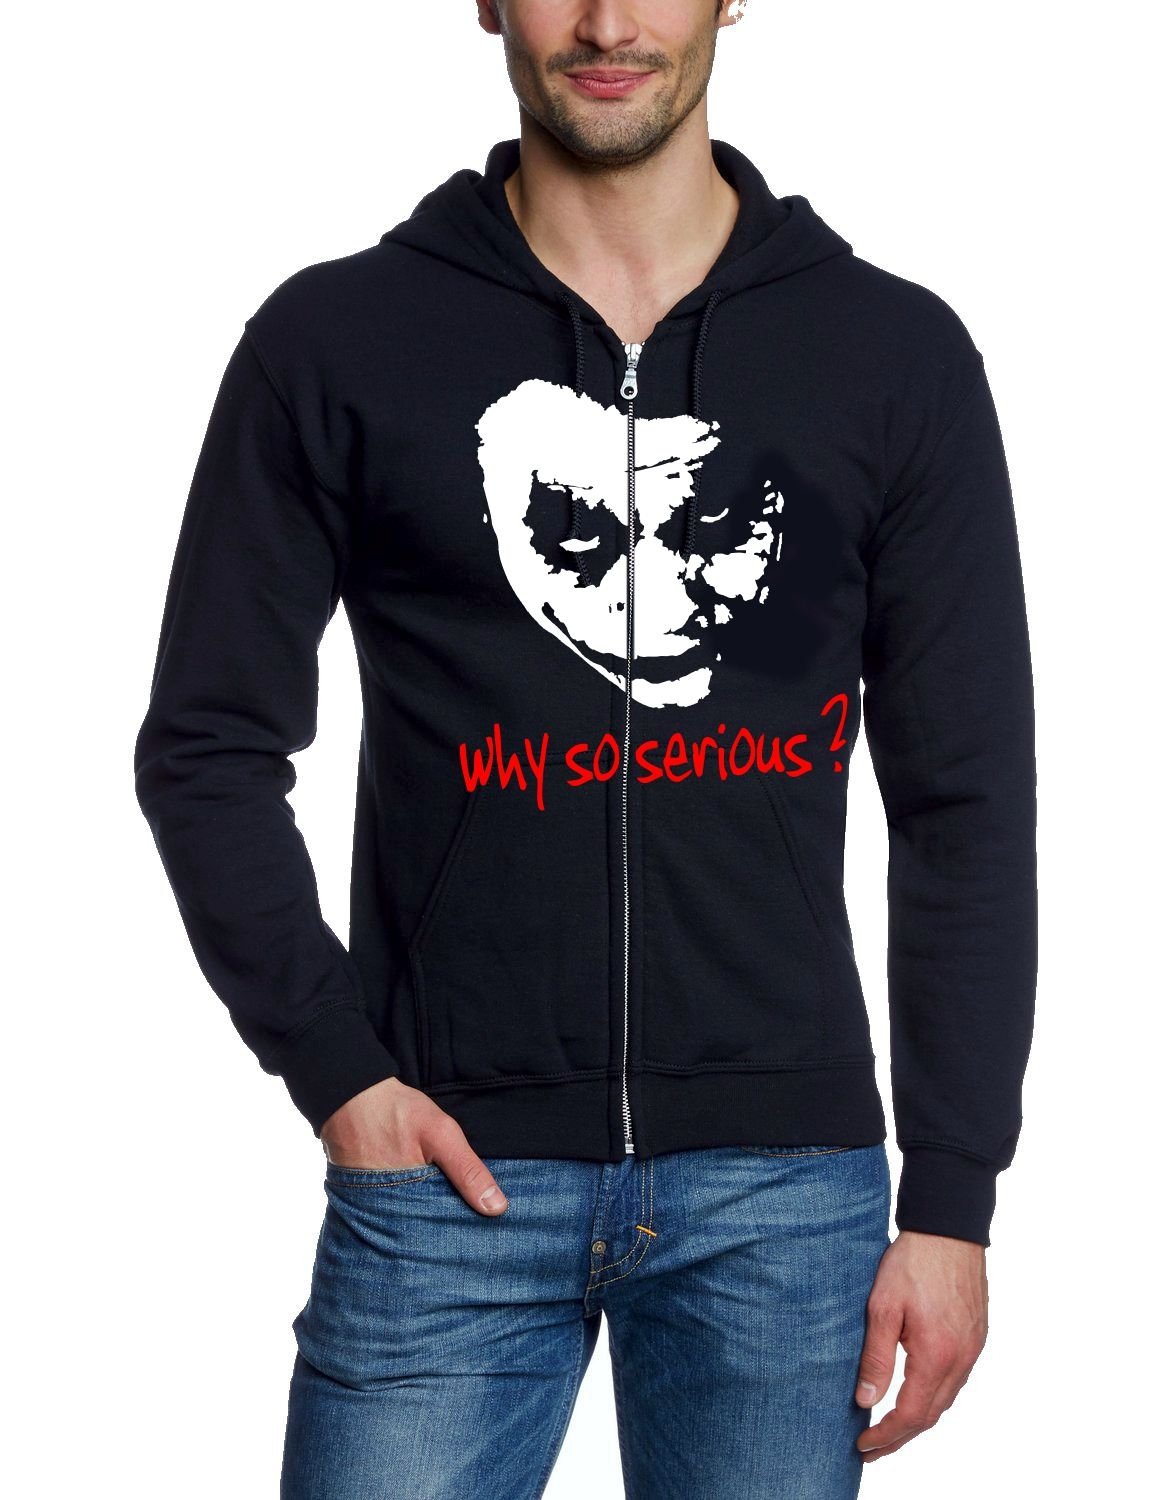 Coole-Fun-T-Shirts Herren Sweatshirtjacke Why So Serious Joker Zipper Hoodie mit Kapuze Sweatshirt, Schwarz, L